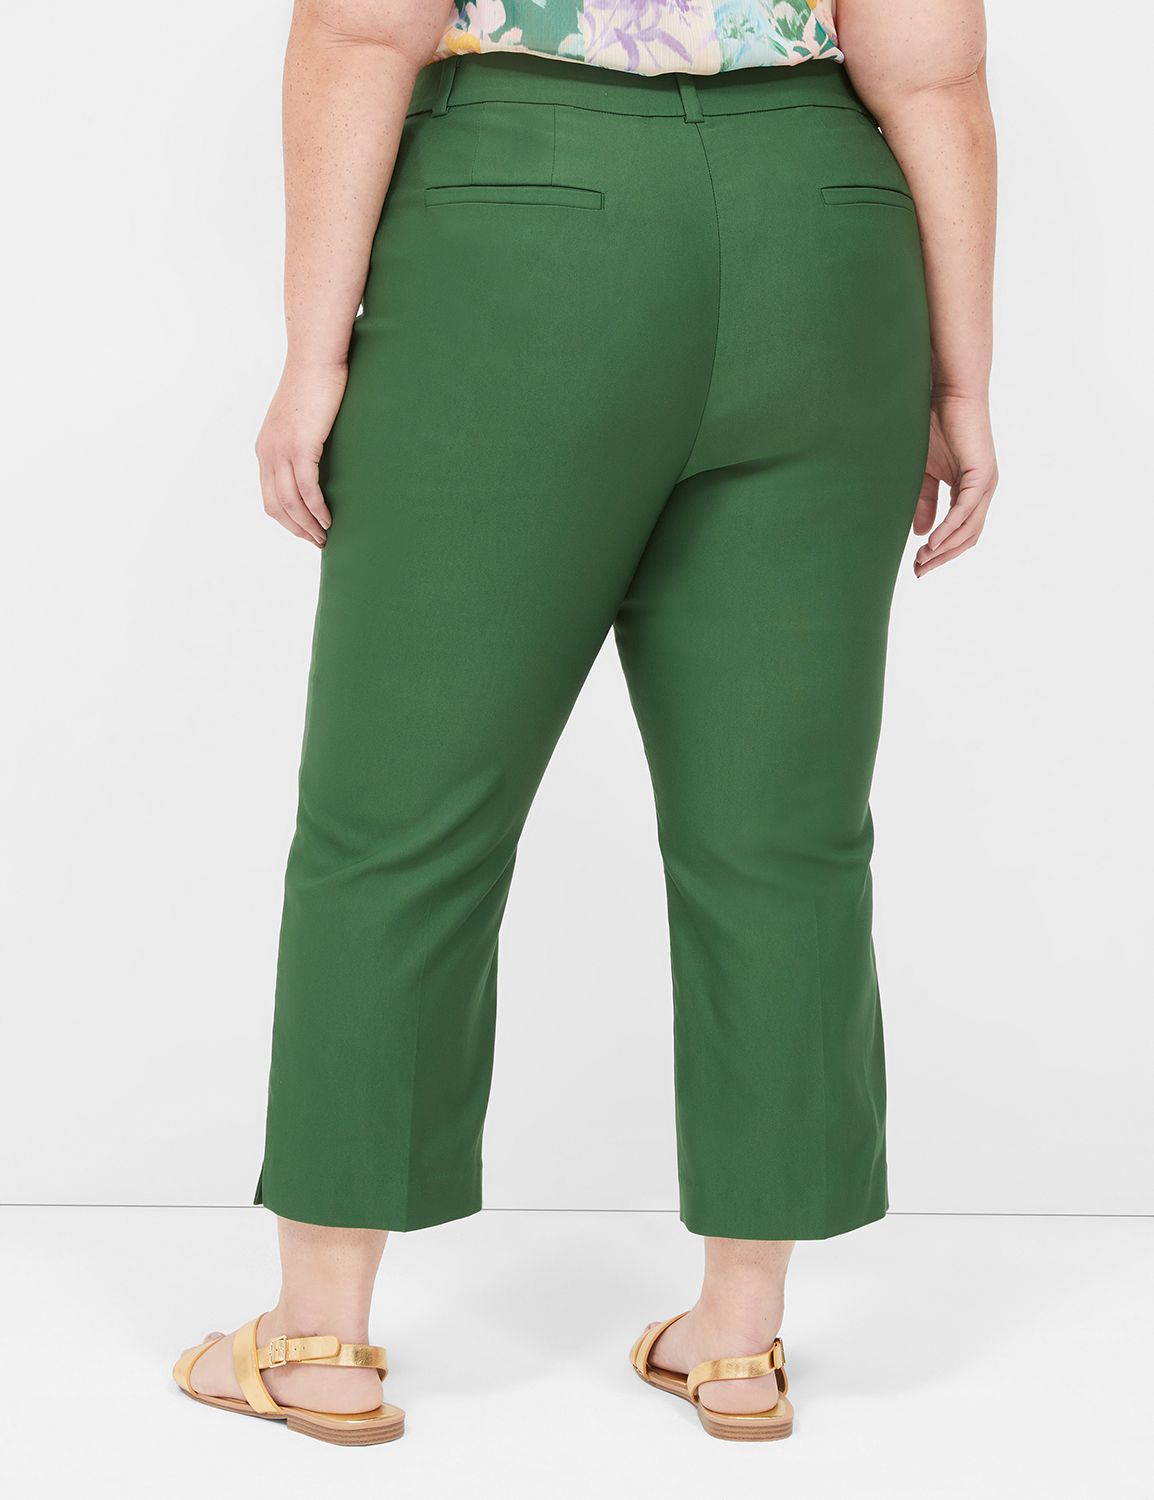 Terra & Sky Women's Plus Size Knit Pants (Regular and Petite Lengths) 